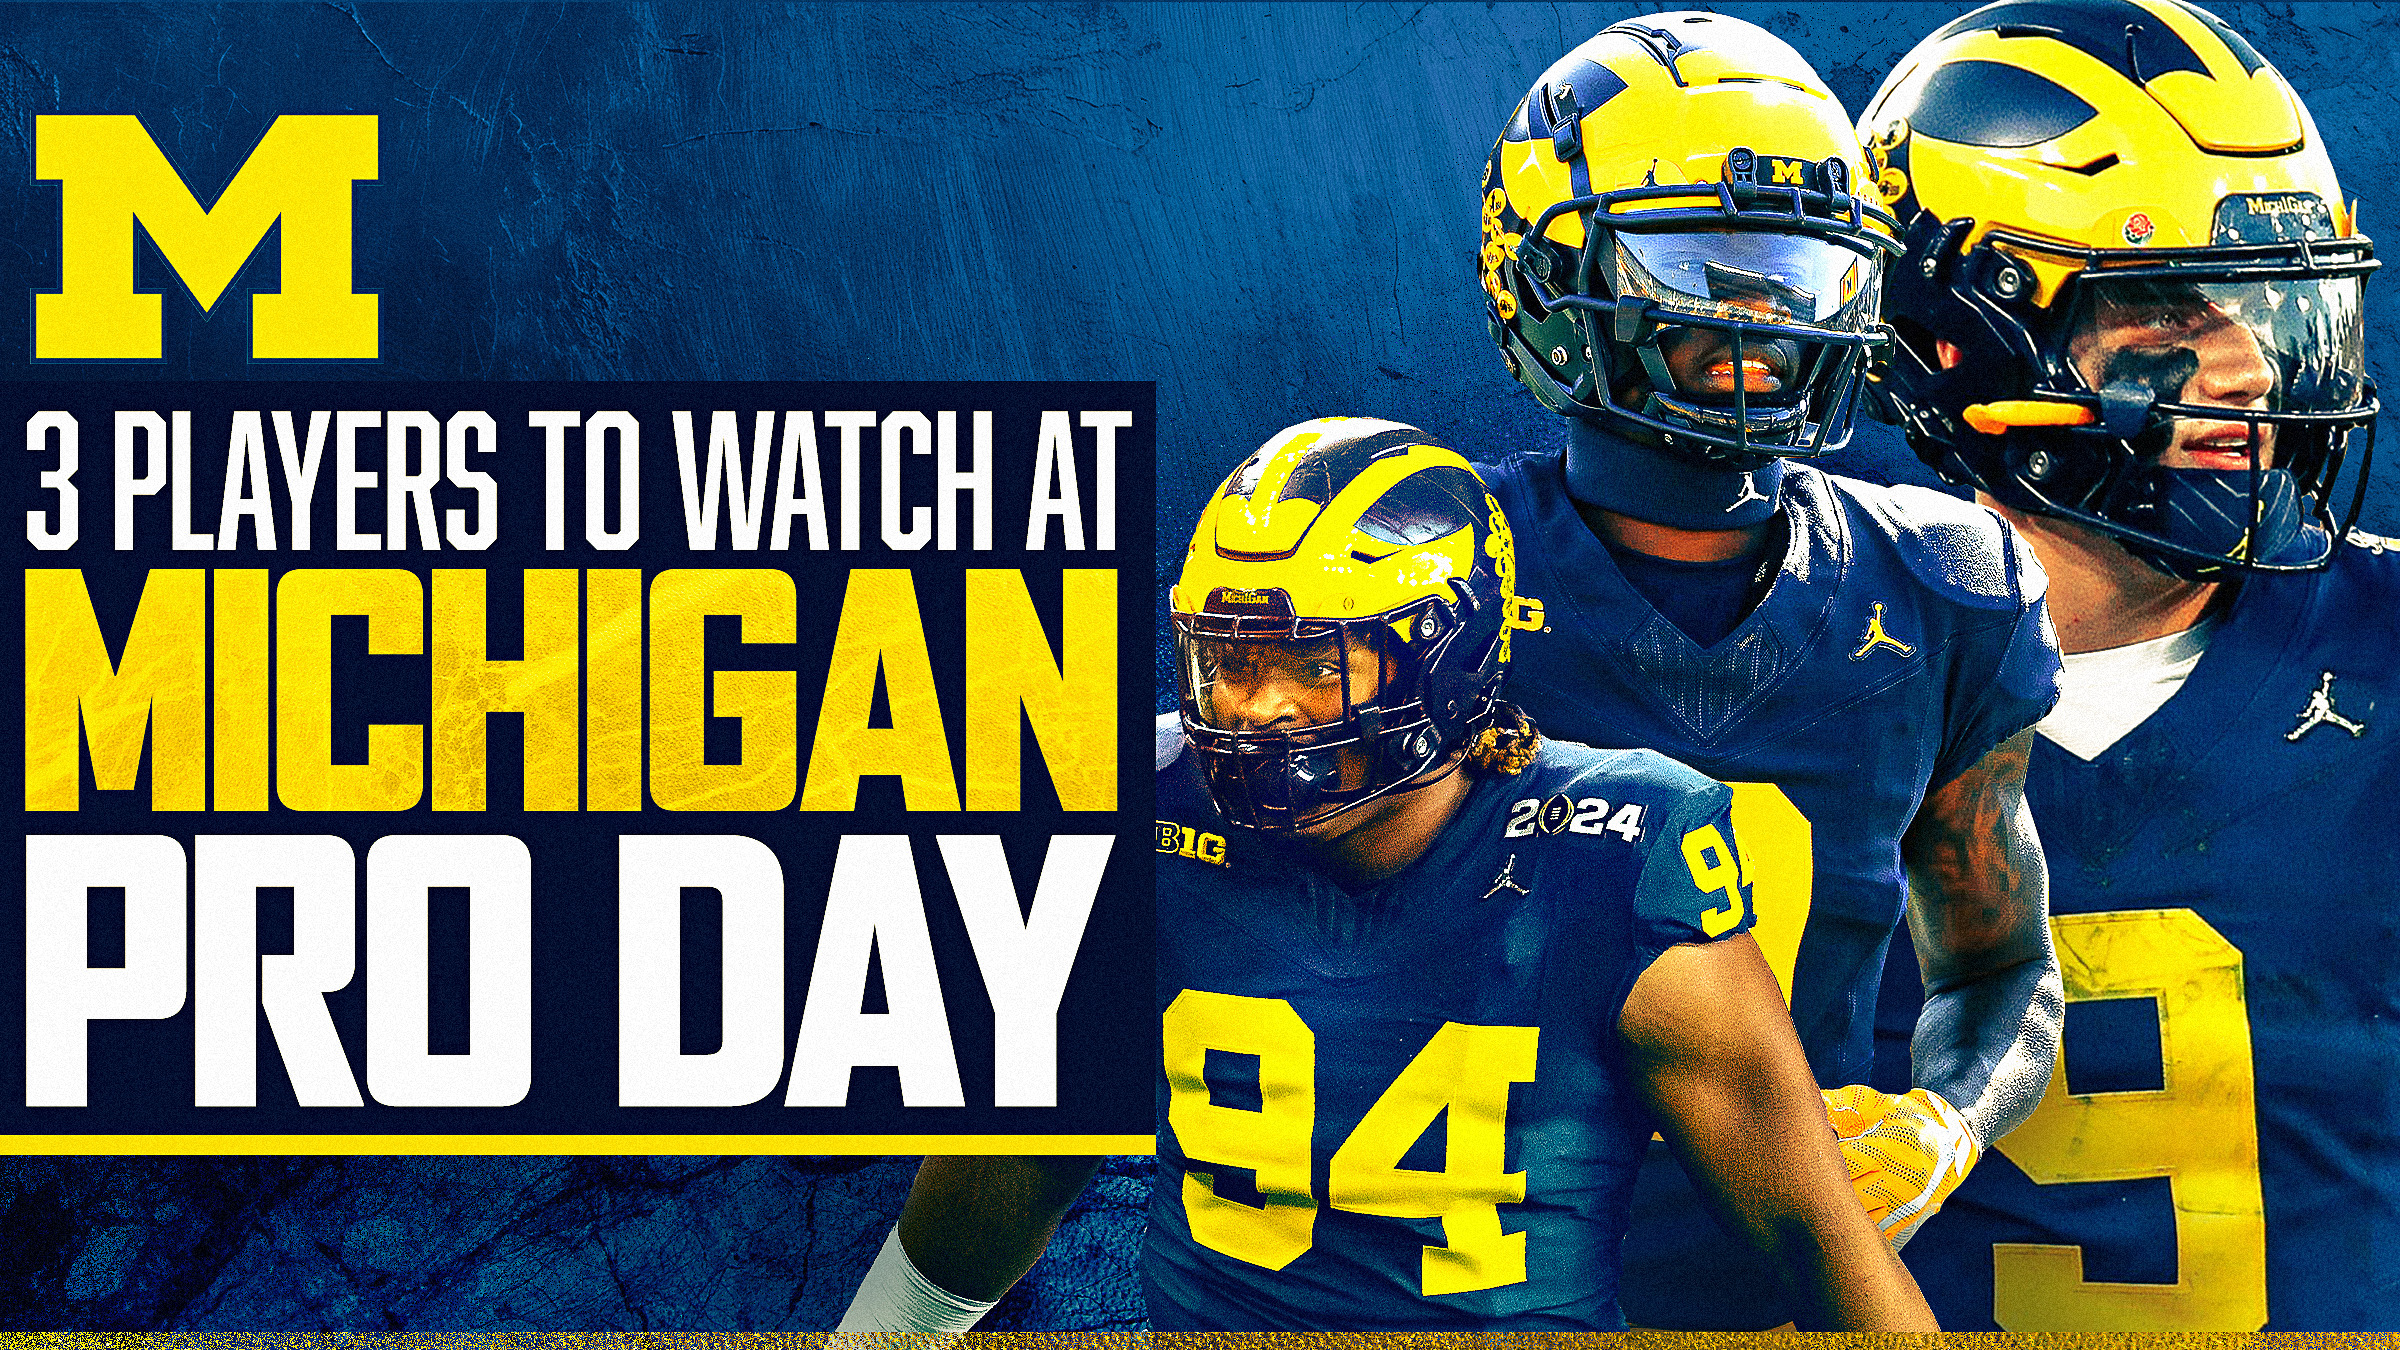 Michigan Pro Day Cover image featuring Kris Jenkins, Mike Sainristil, & J.J. McCarthy